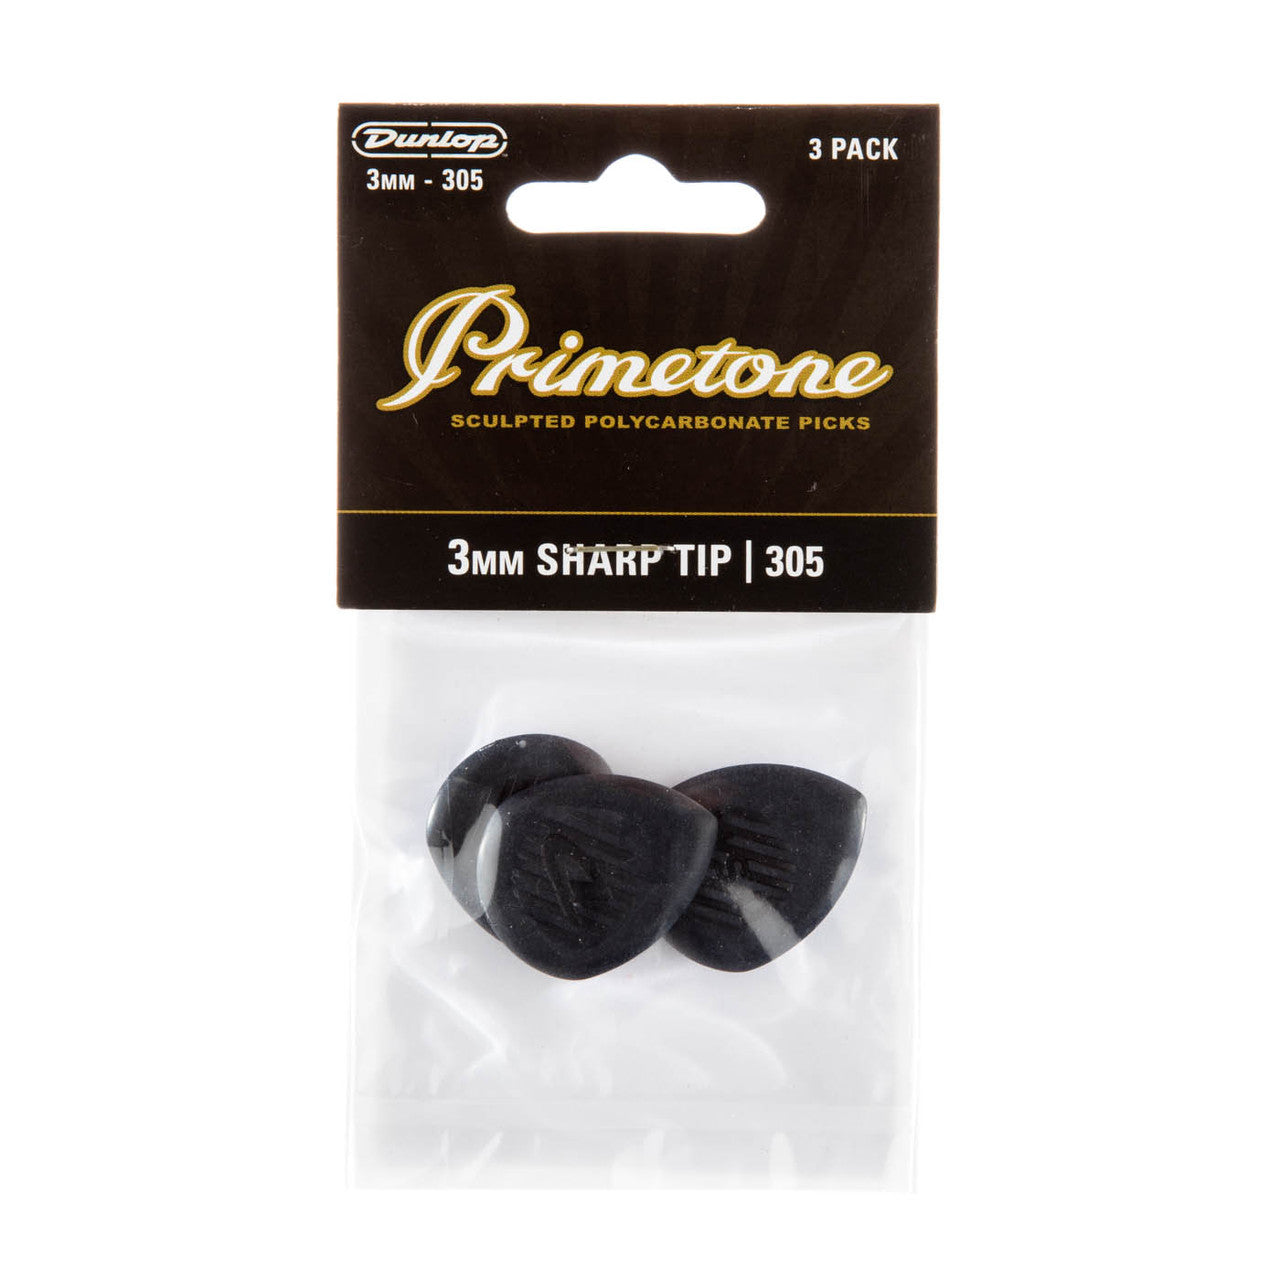 Jim Dunlop Primetone 3mm Pointed Tip, Pack of 3